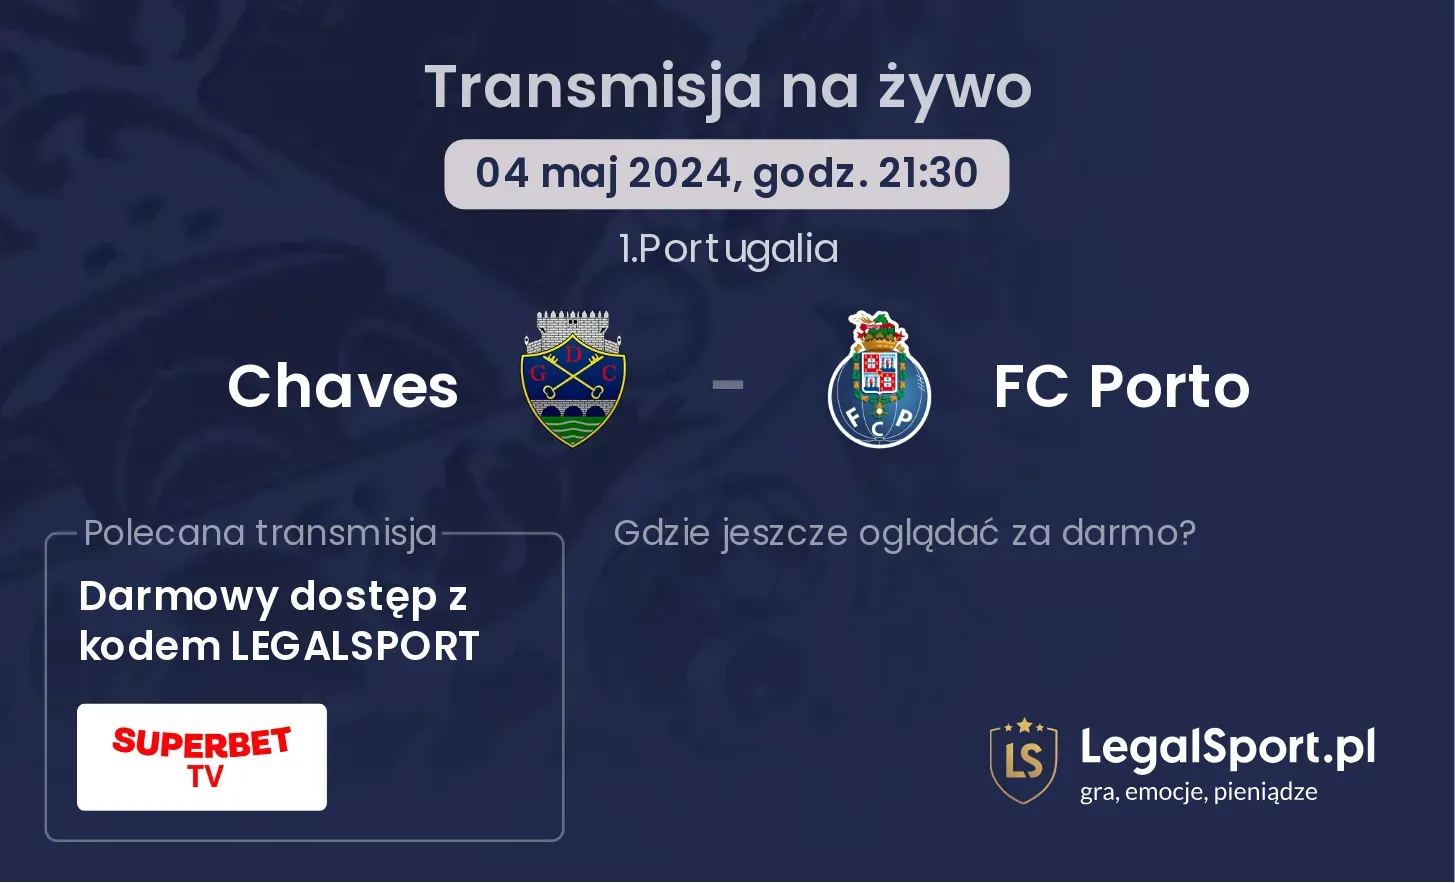 Chaves - FC Porto transmisja na żywo